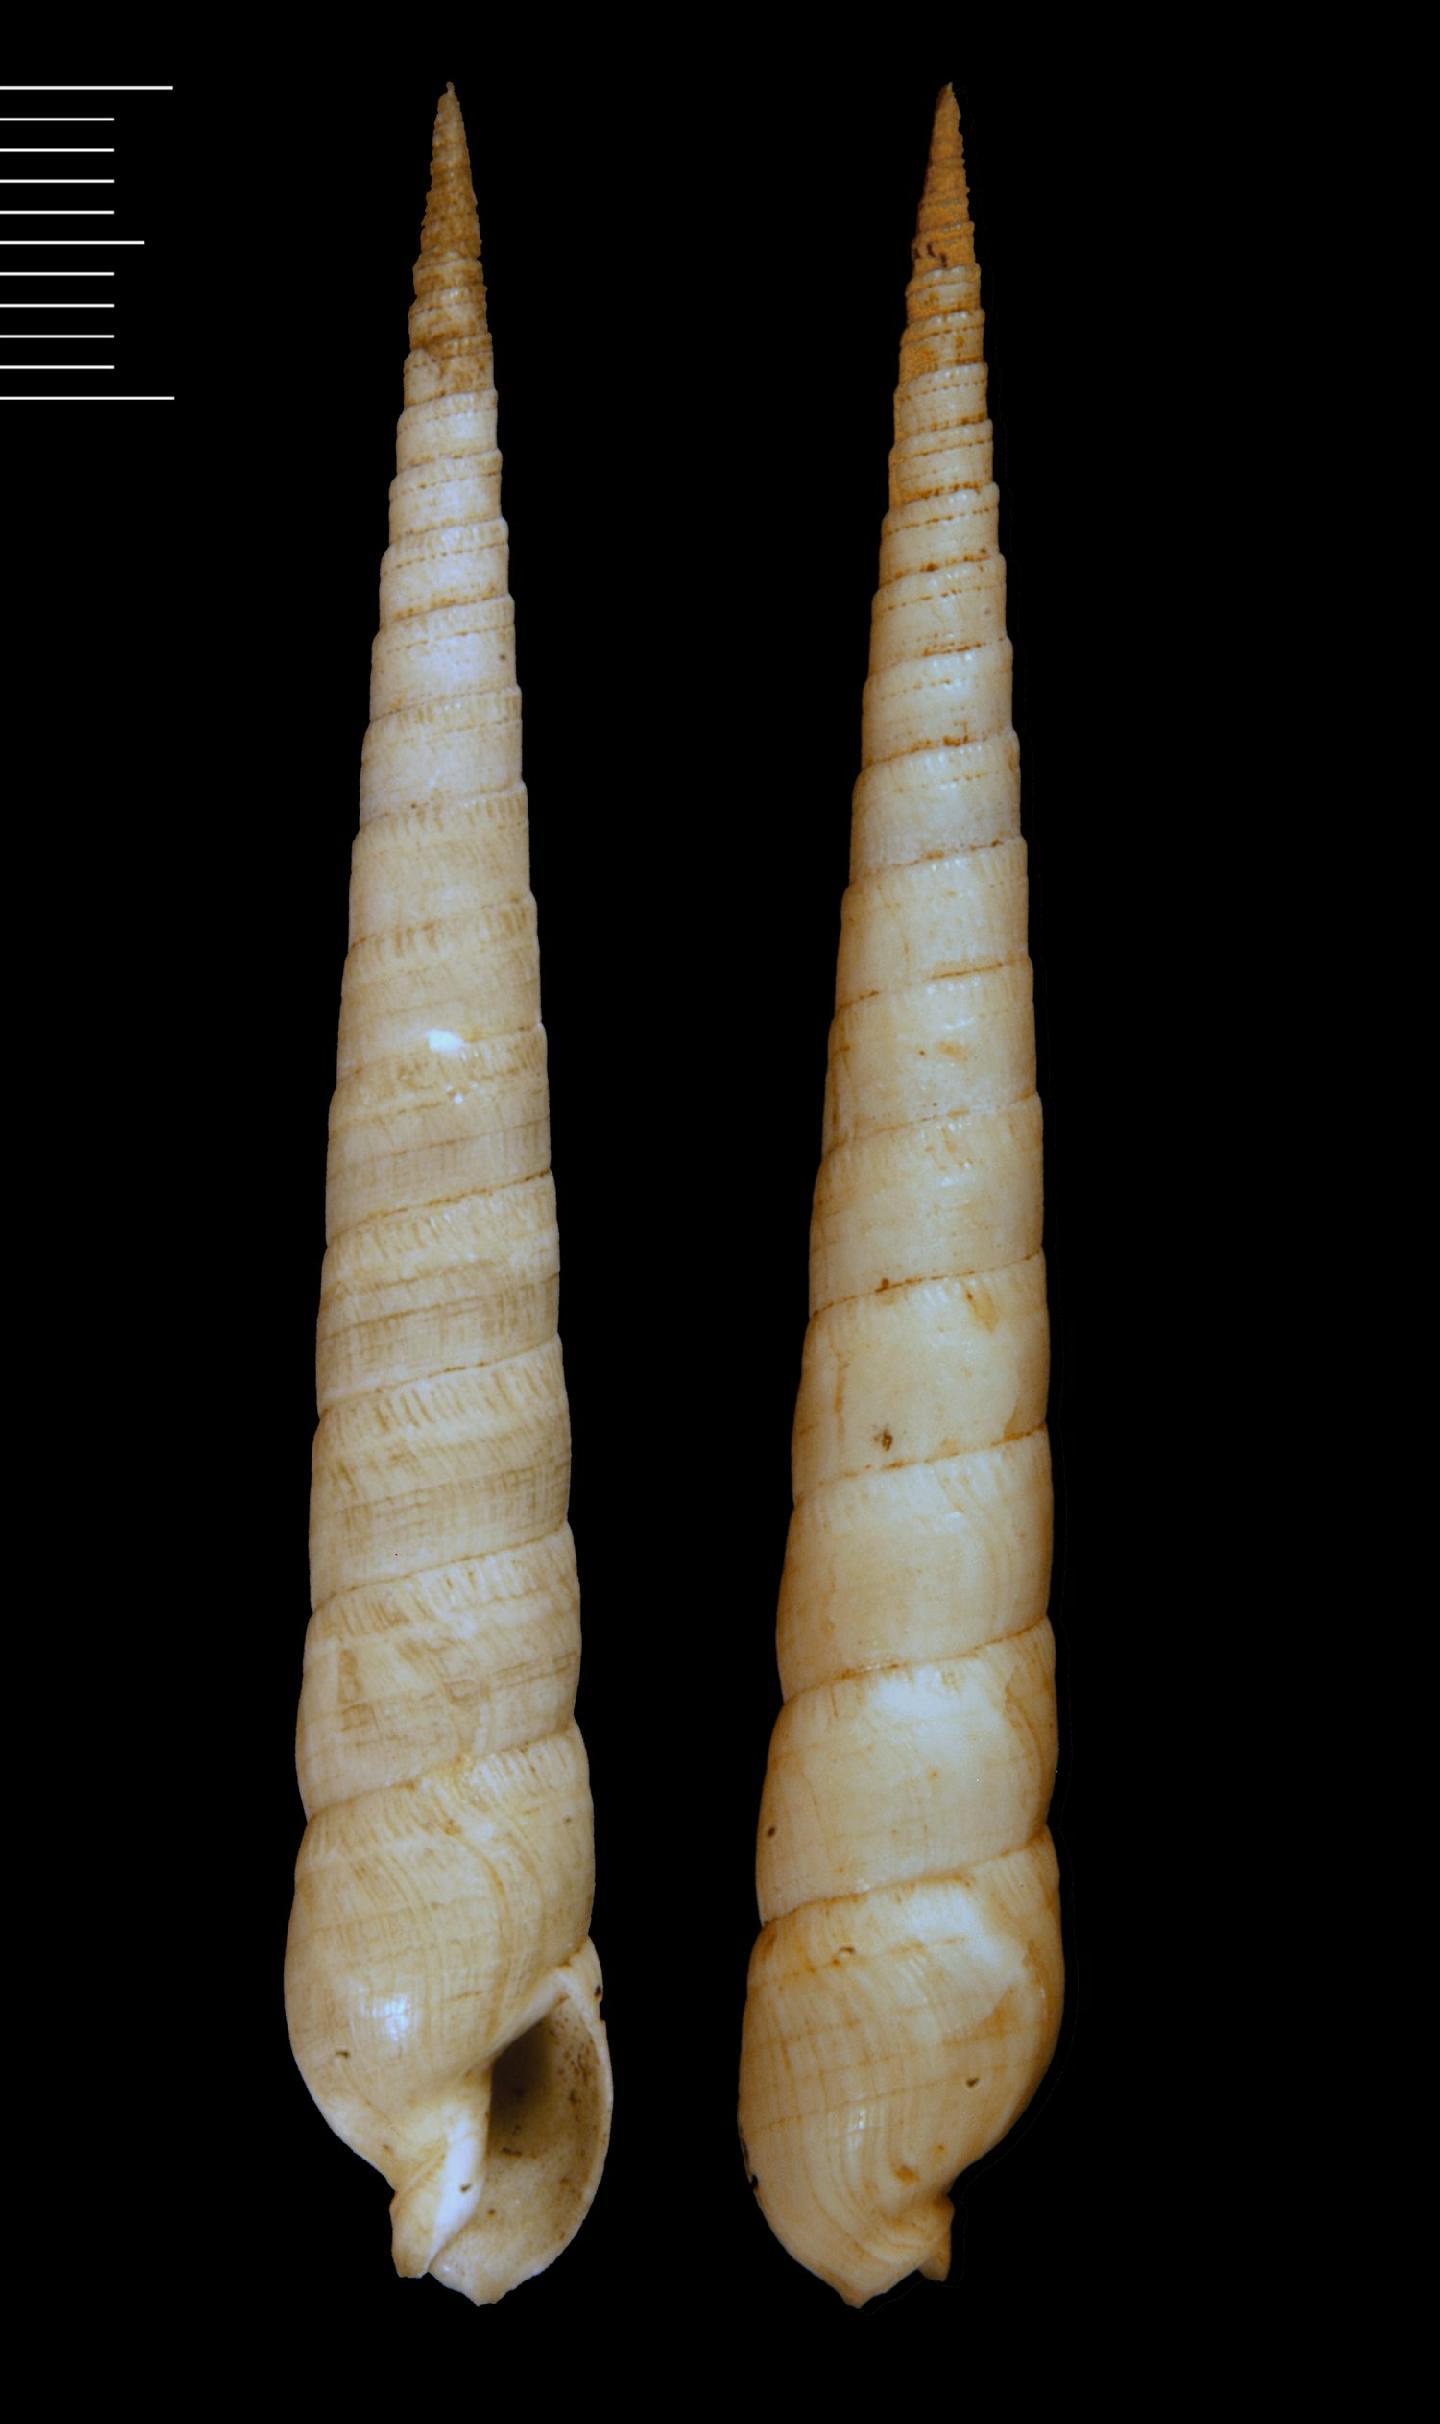 To NHMUK collection (Terebra punctatostriata Gray, 1834; LECTOTYPE; NHMUK:ecatalogue:5758351)